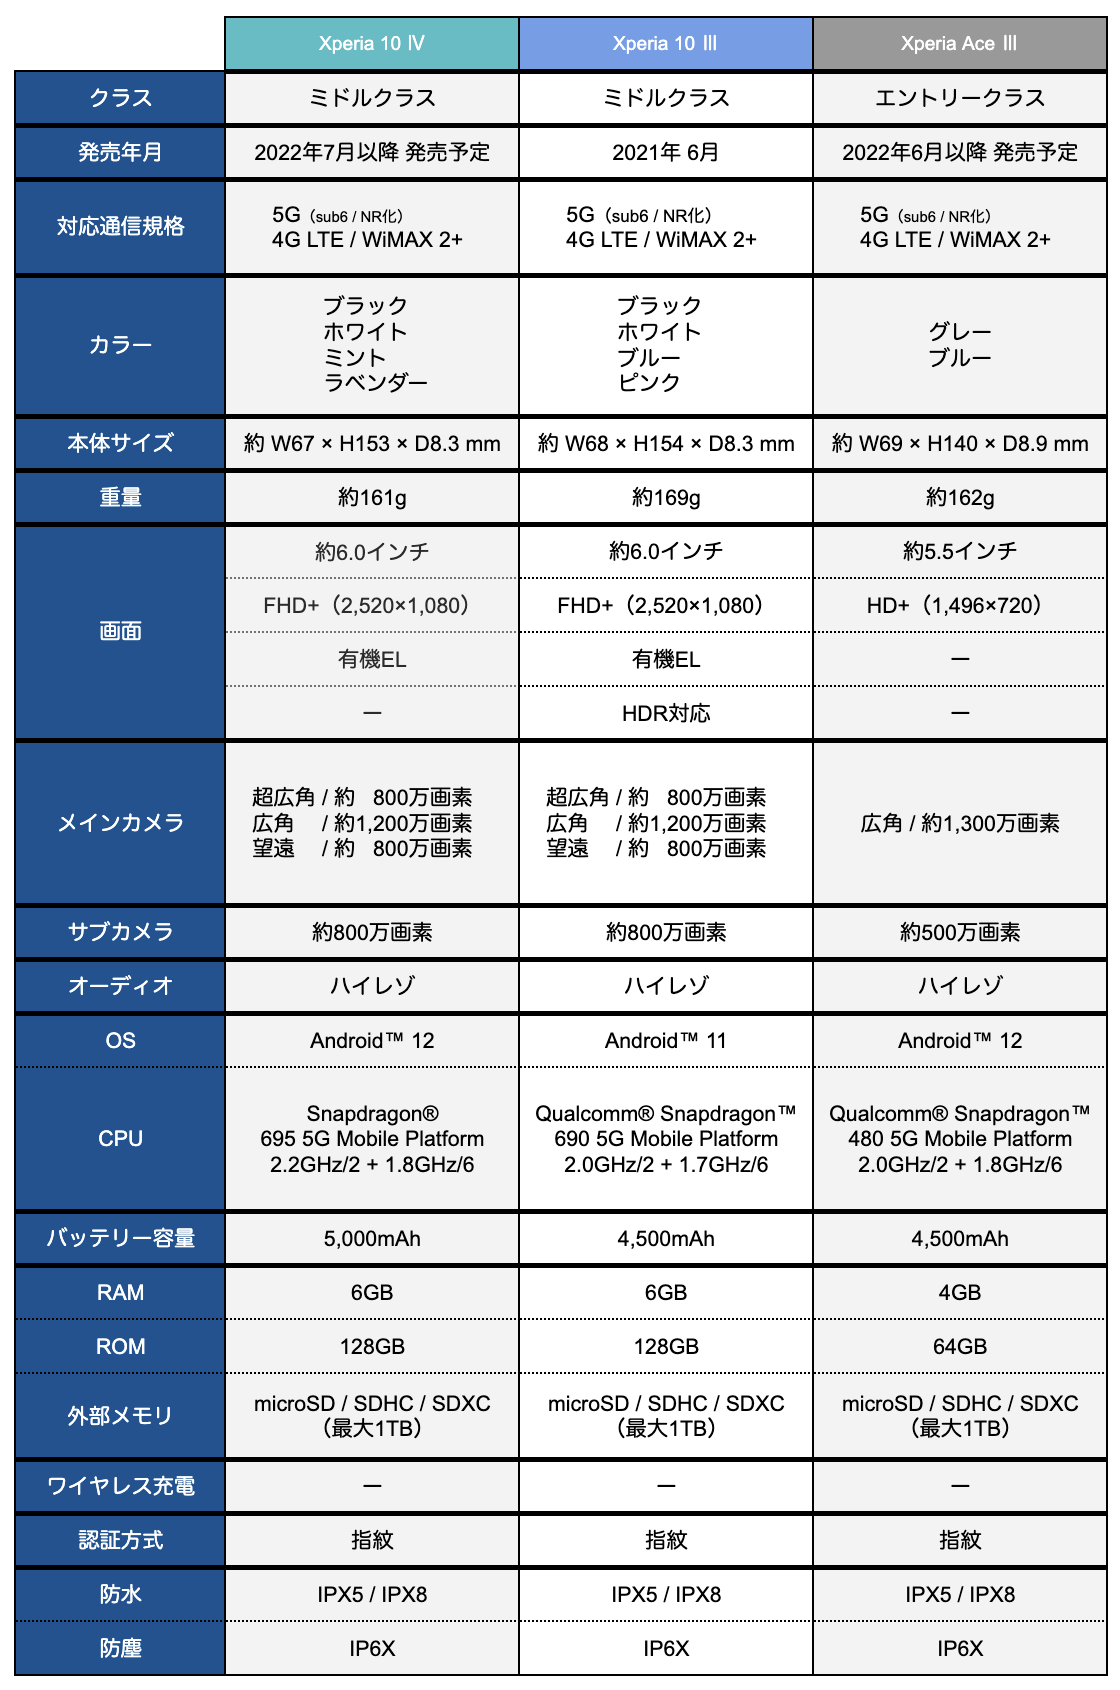 Xperia 10 IV / Xperia 10 III / Xperia Ace III の機能スペック比較表